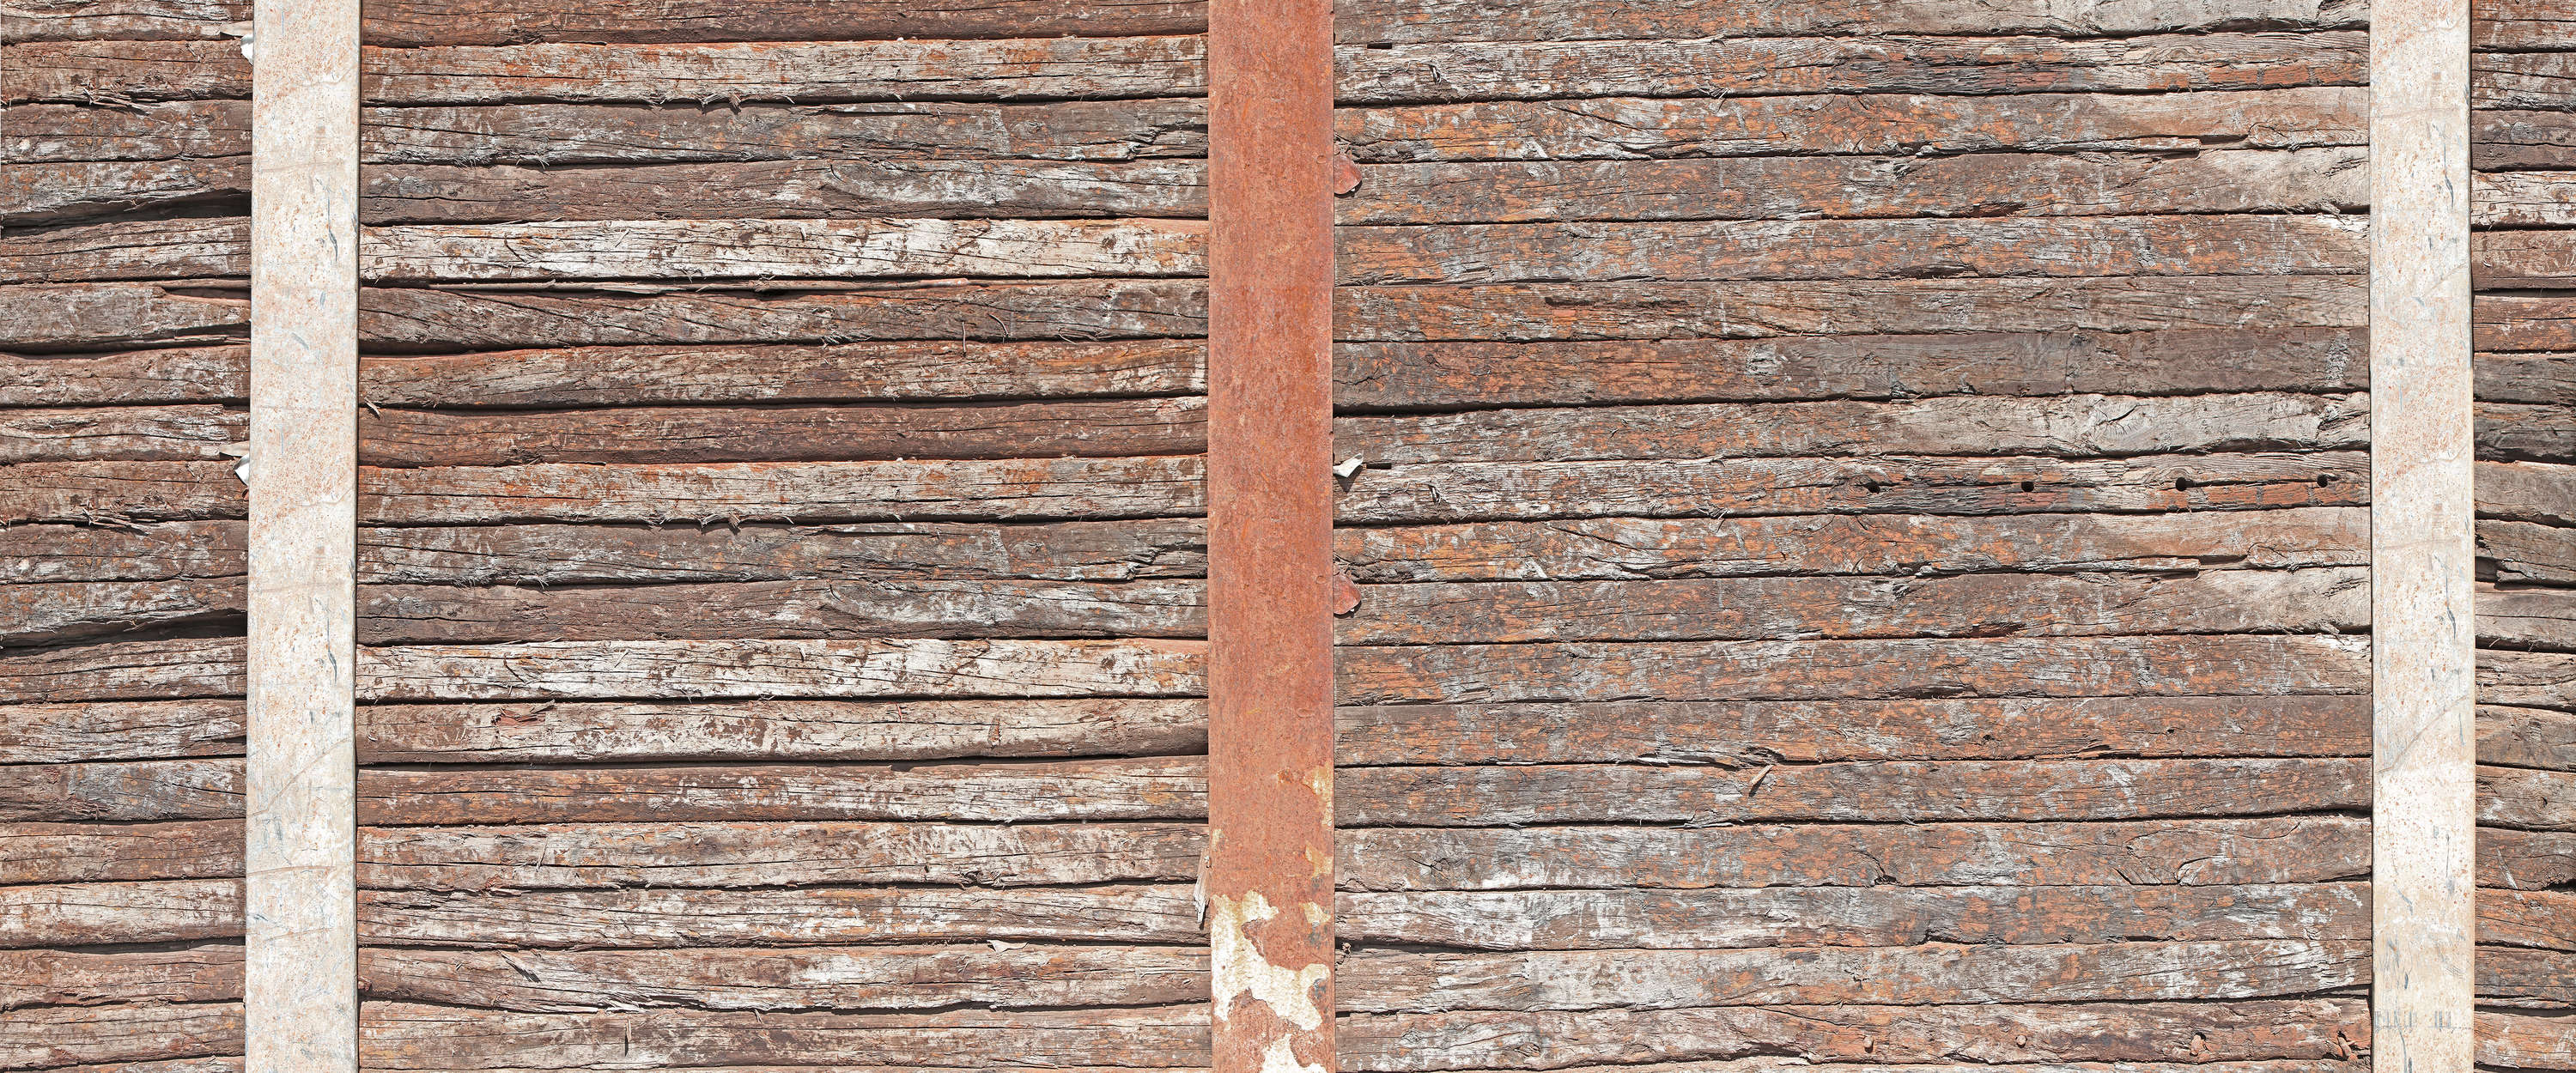             Fotomurali vecchia parete di legno tra travi d'acciaio arrugginite
        